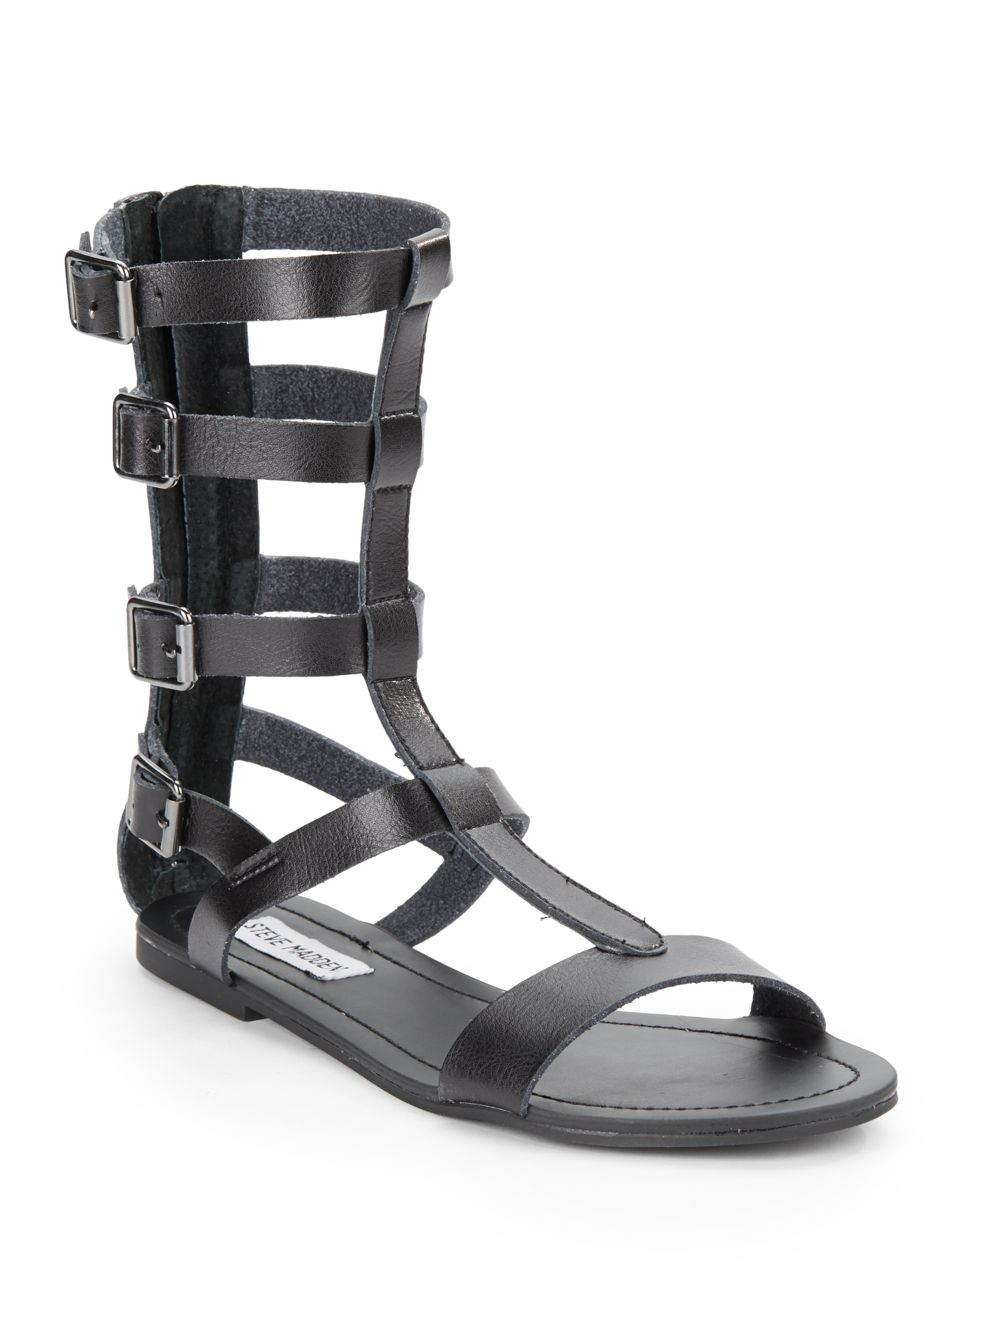 Steve Madden Gunterr Leather Gladiator Flat Sandals in Black | Lyst